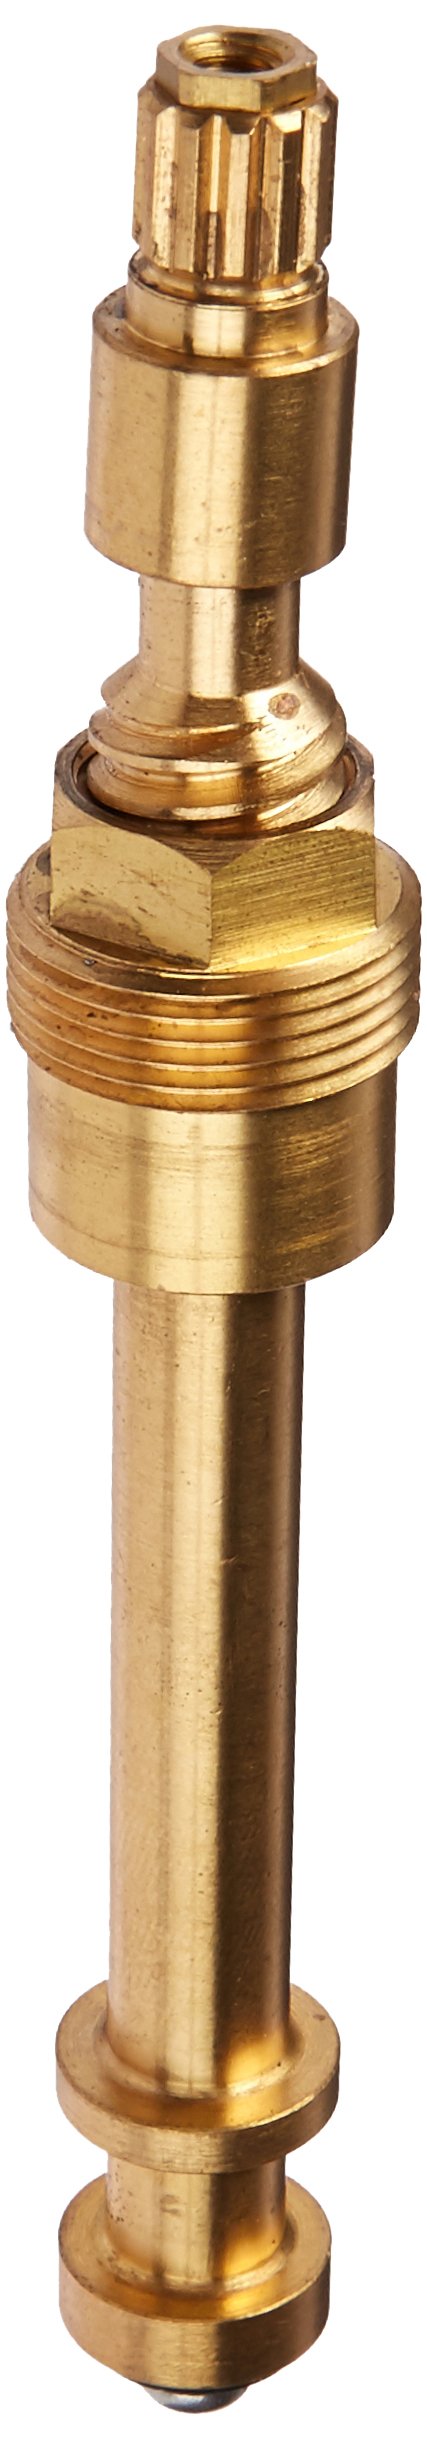 Pfister 910-3330 LAV Faucet, Copper